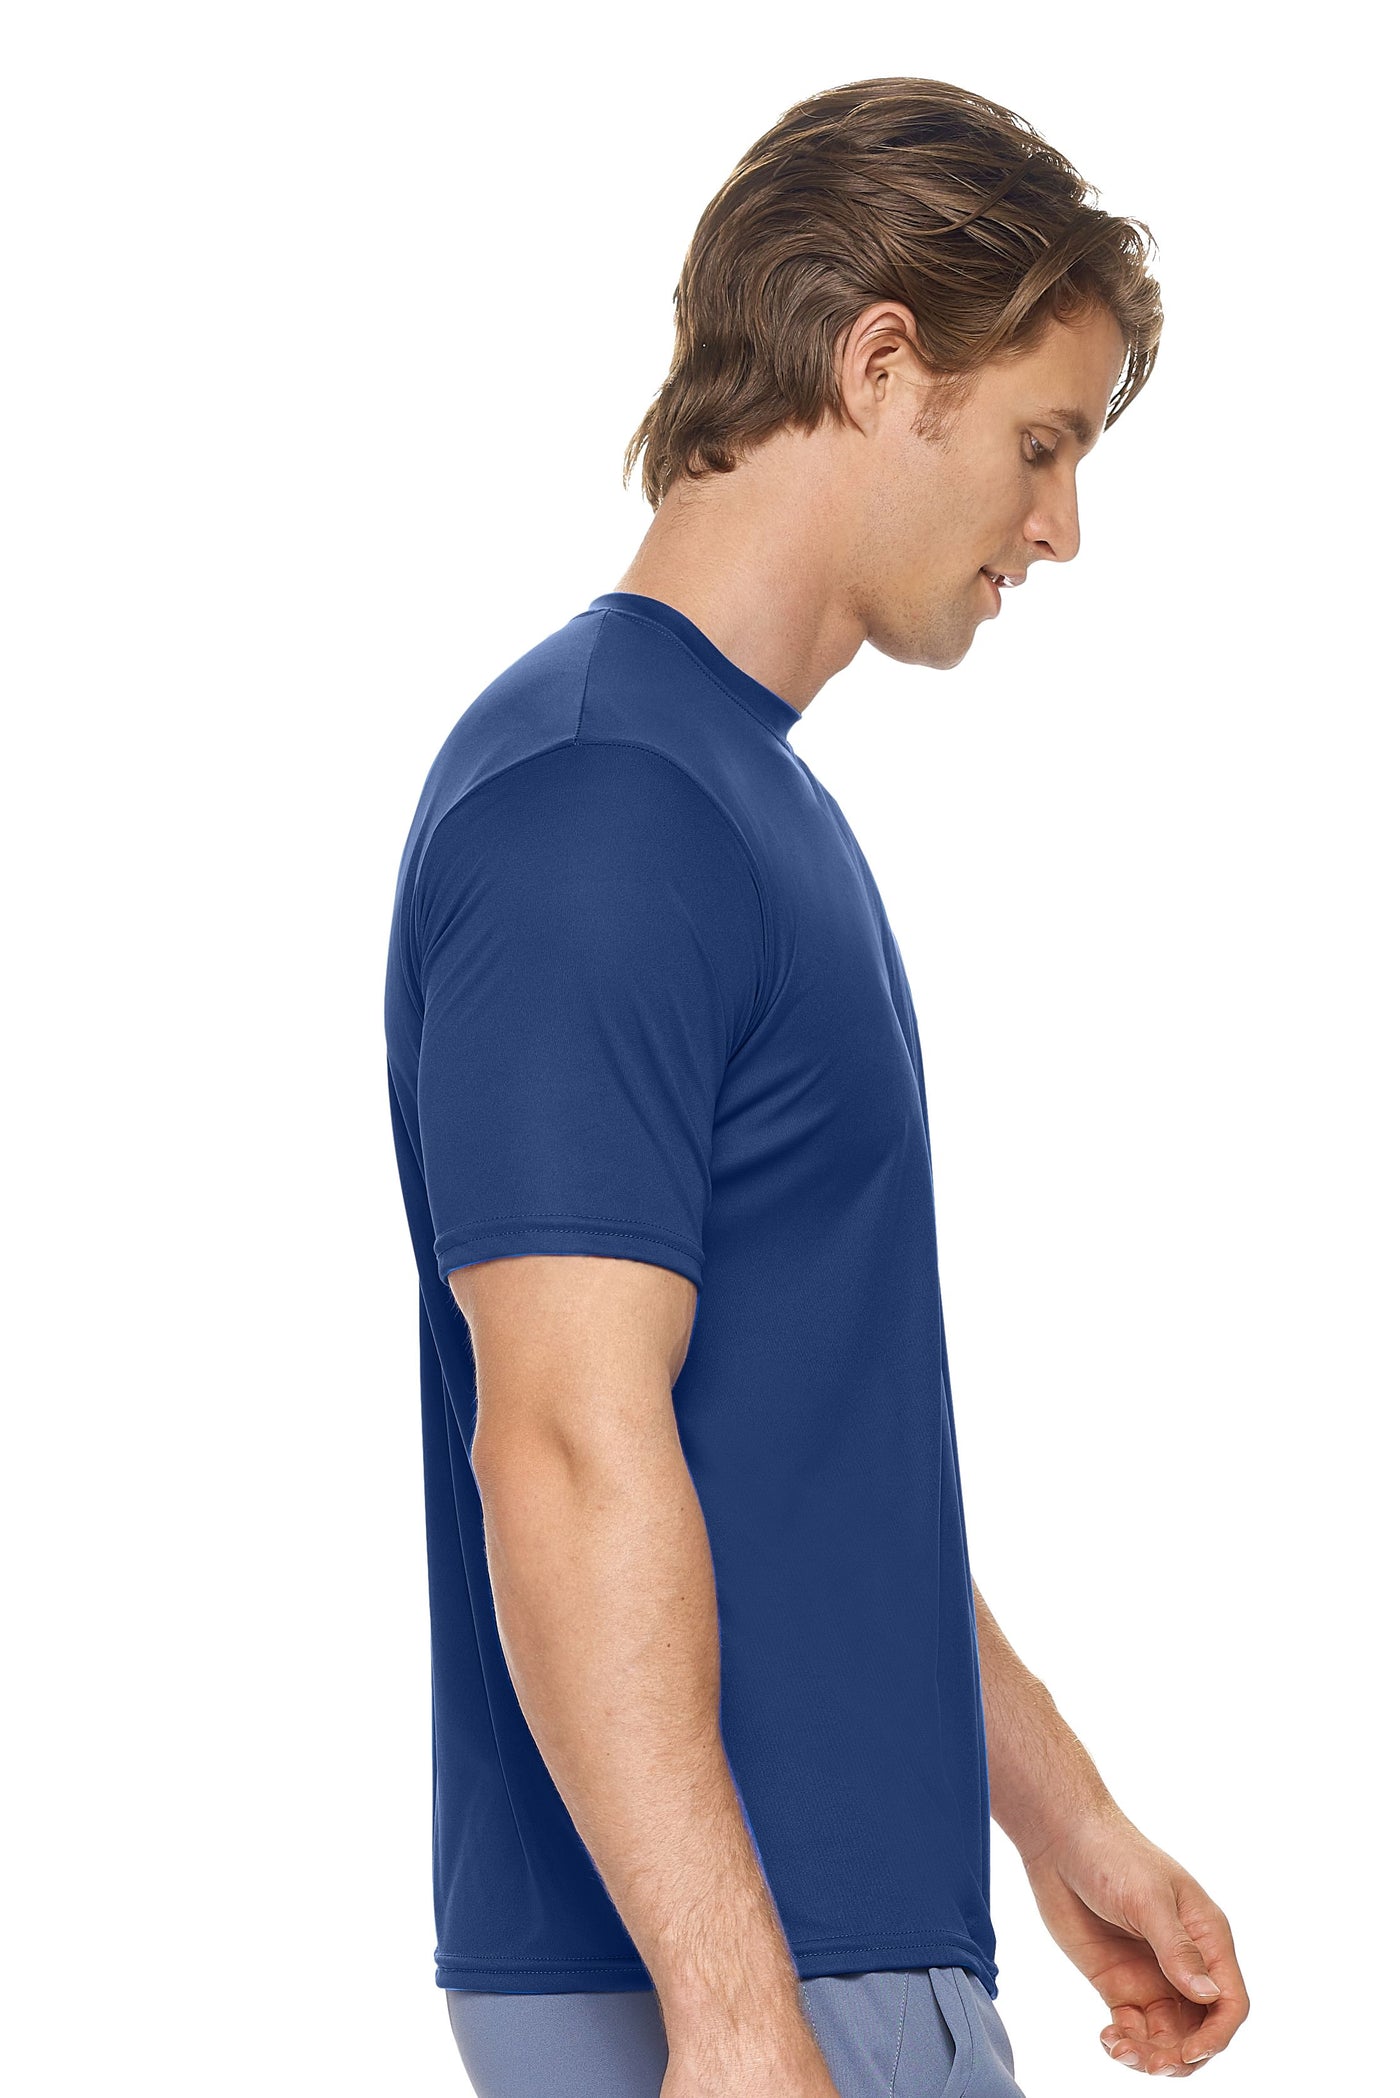 Expert Brand Retail Made in USA Men's Sportswear Activewear Running T-Shirt Pk Max navy 2#color_navy